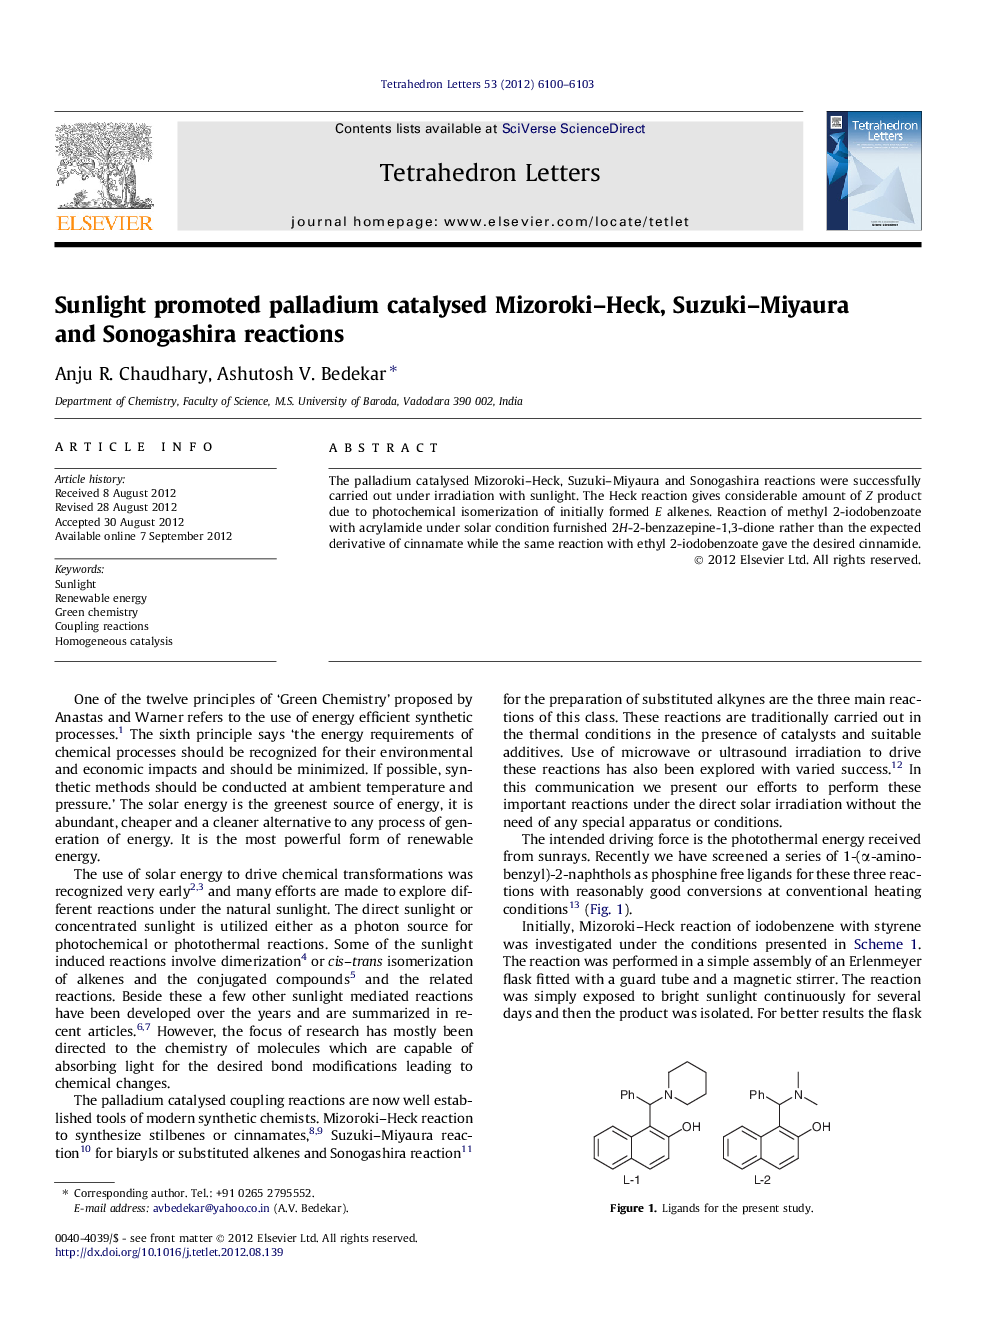 Sunlight promoted palladium catalysed Mizoroki-Heck, Suzuki-Miyaura and Sonogashira reactions